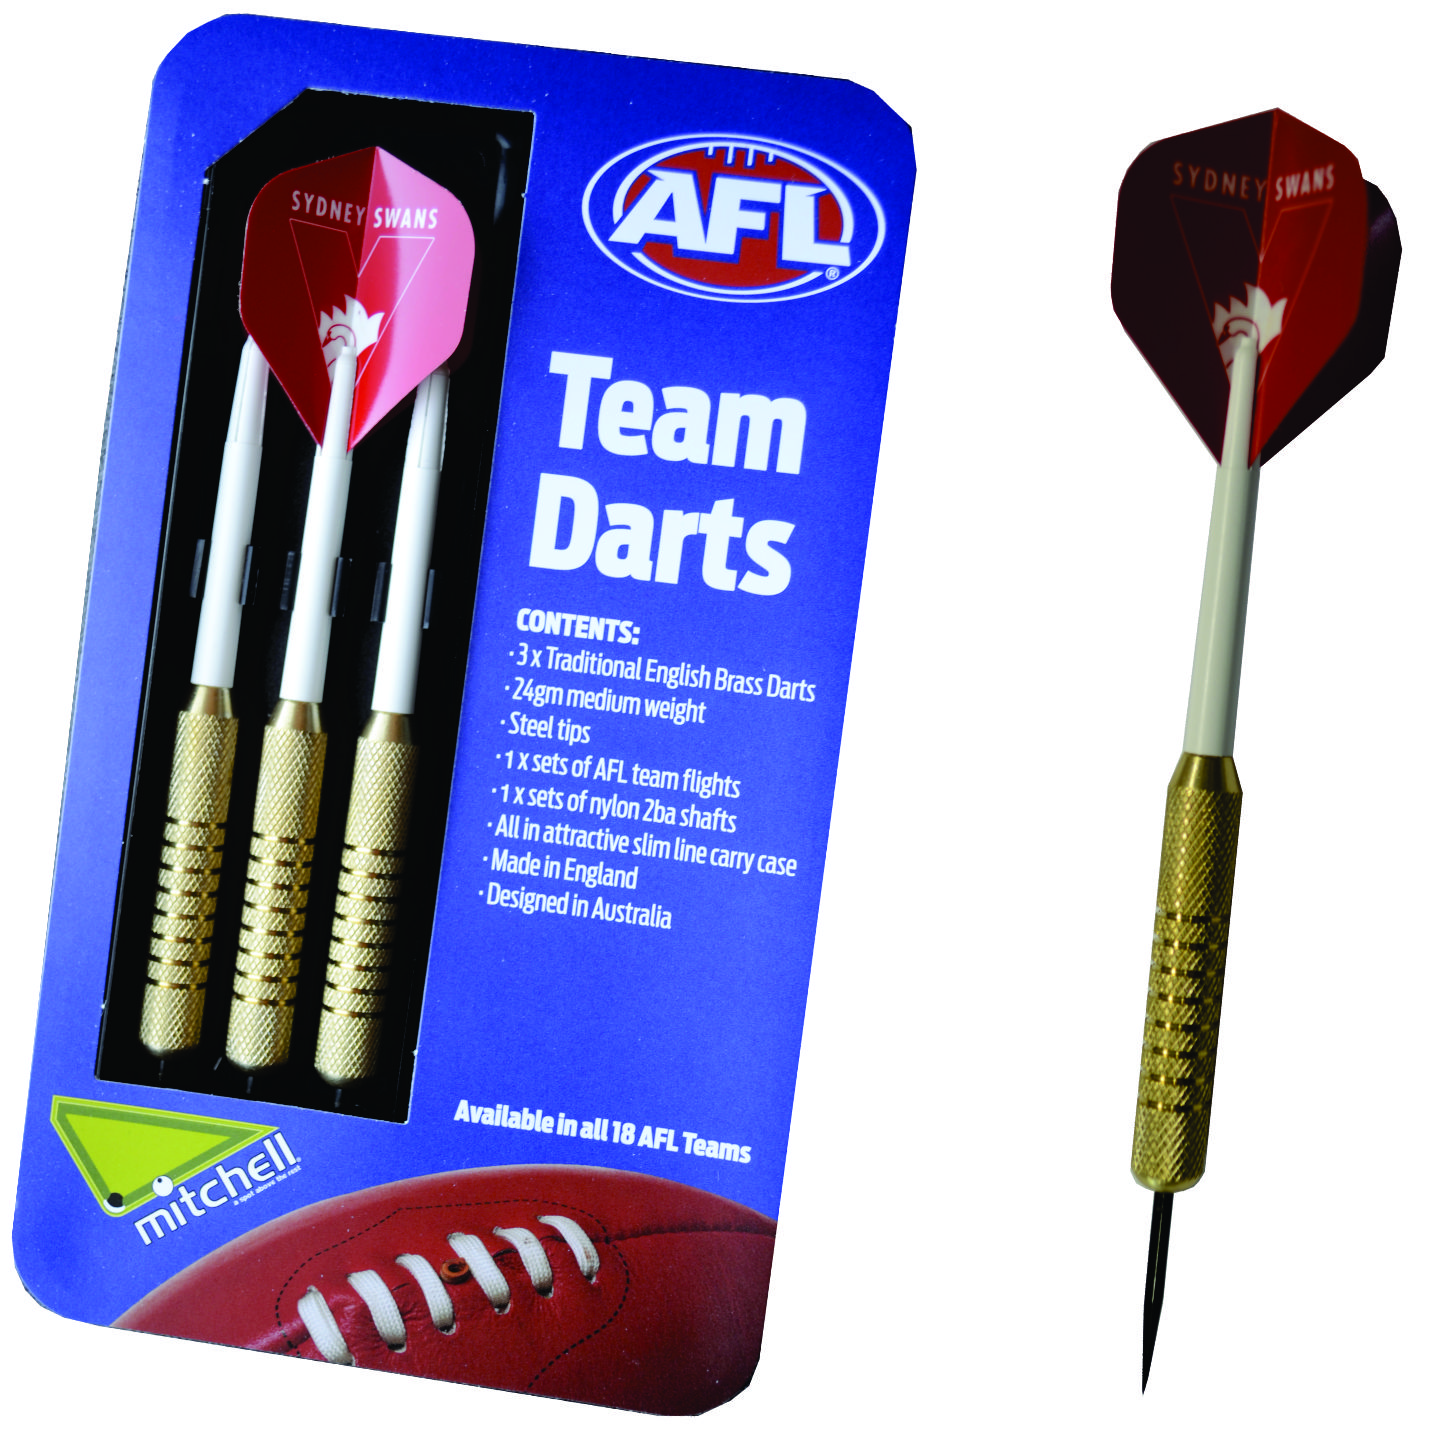 Sydney Swans AFL Set of 3 Traditional English Brass Darts